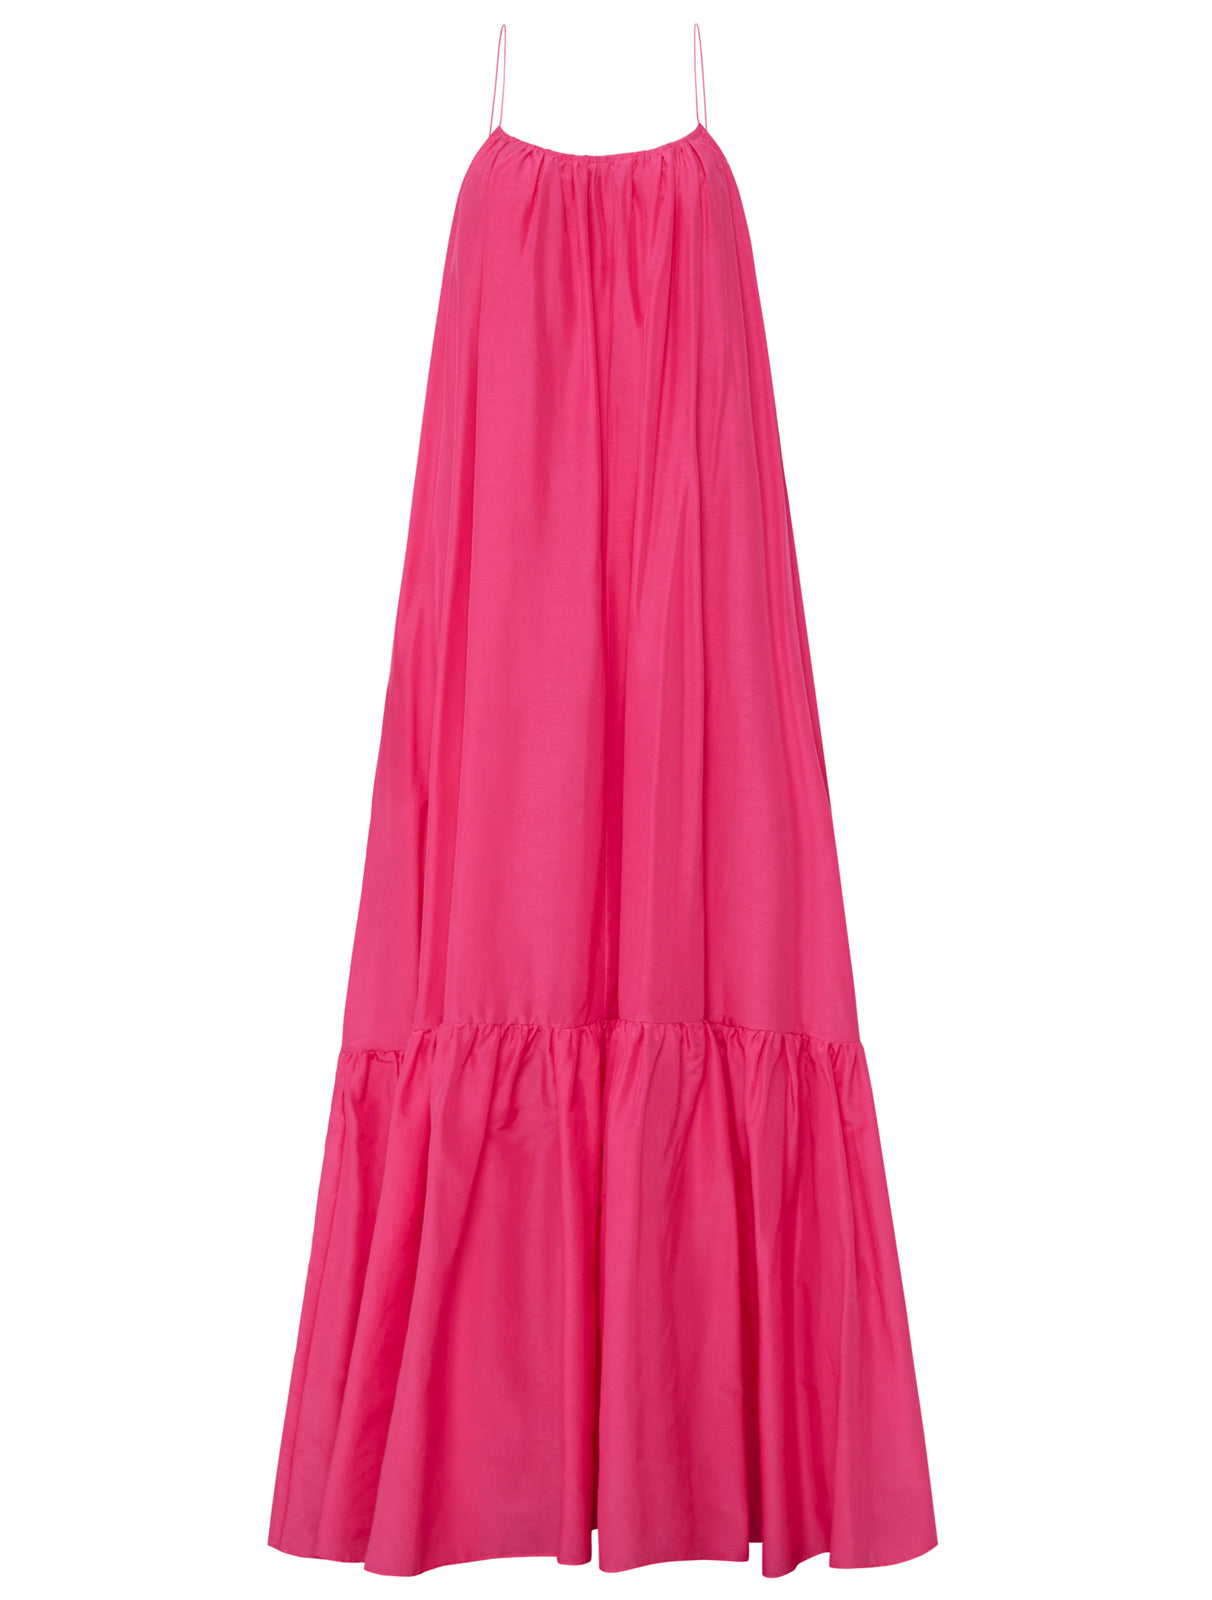 Matteau sherbert pink single layer gathered summer dress